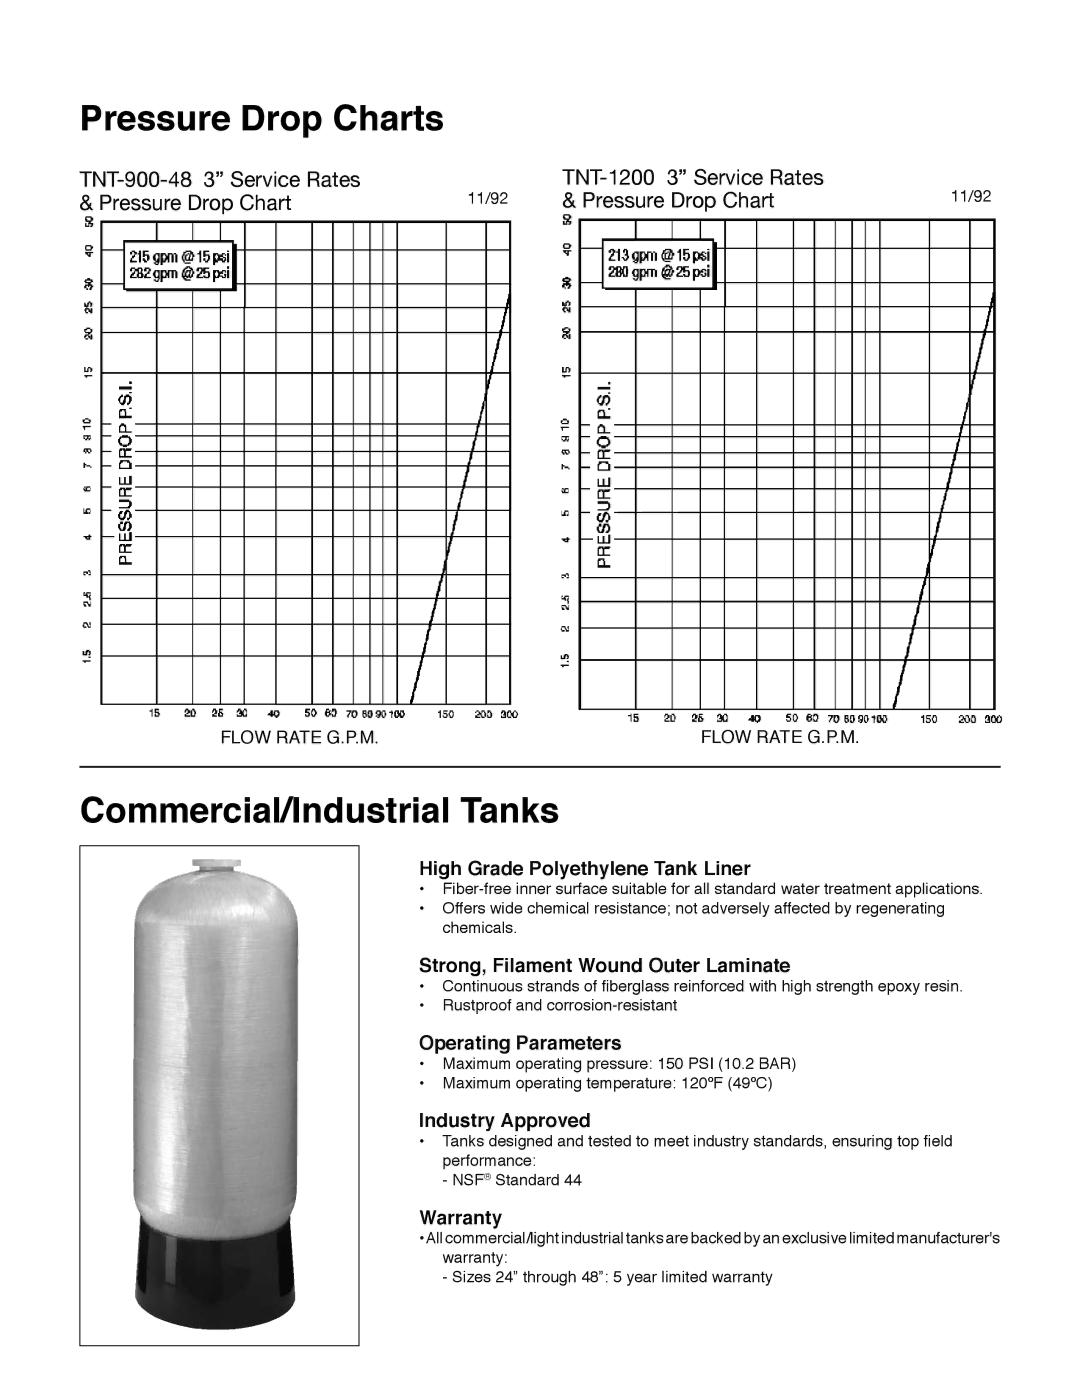 Hellenbrand TNT Series manual Pressure Drop Charts, Commercial/Industrial Tanks 